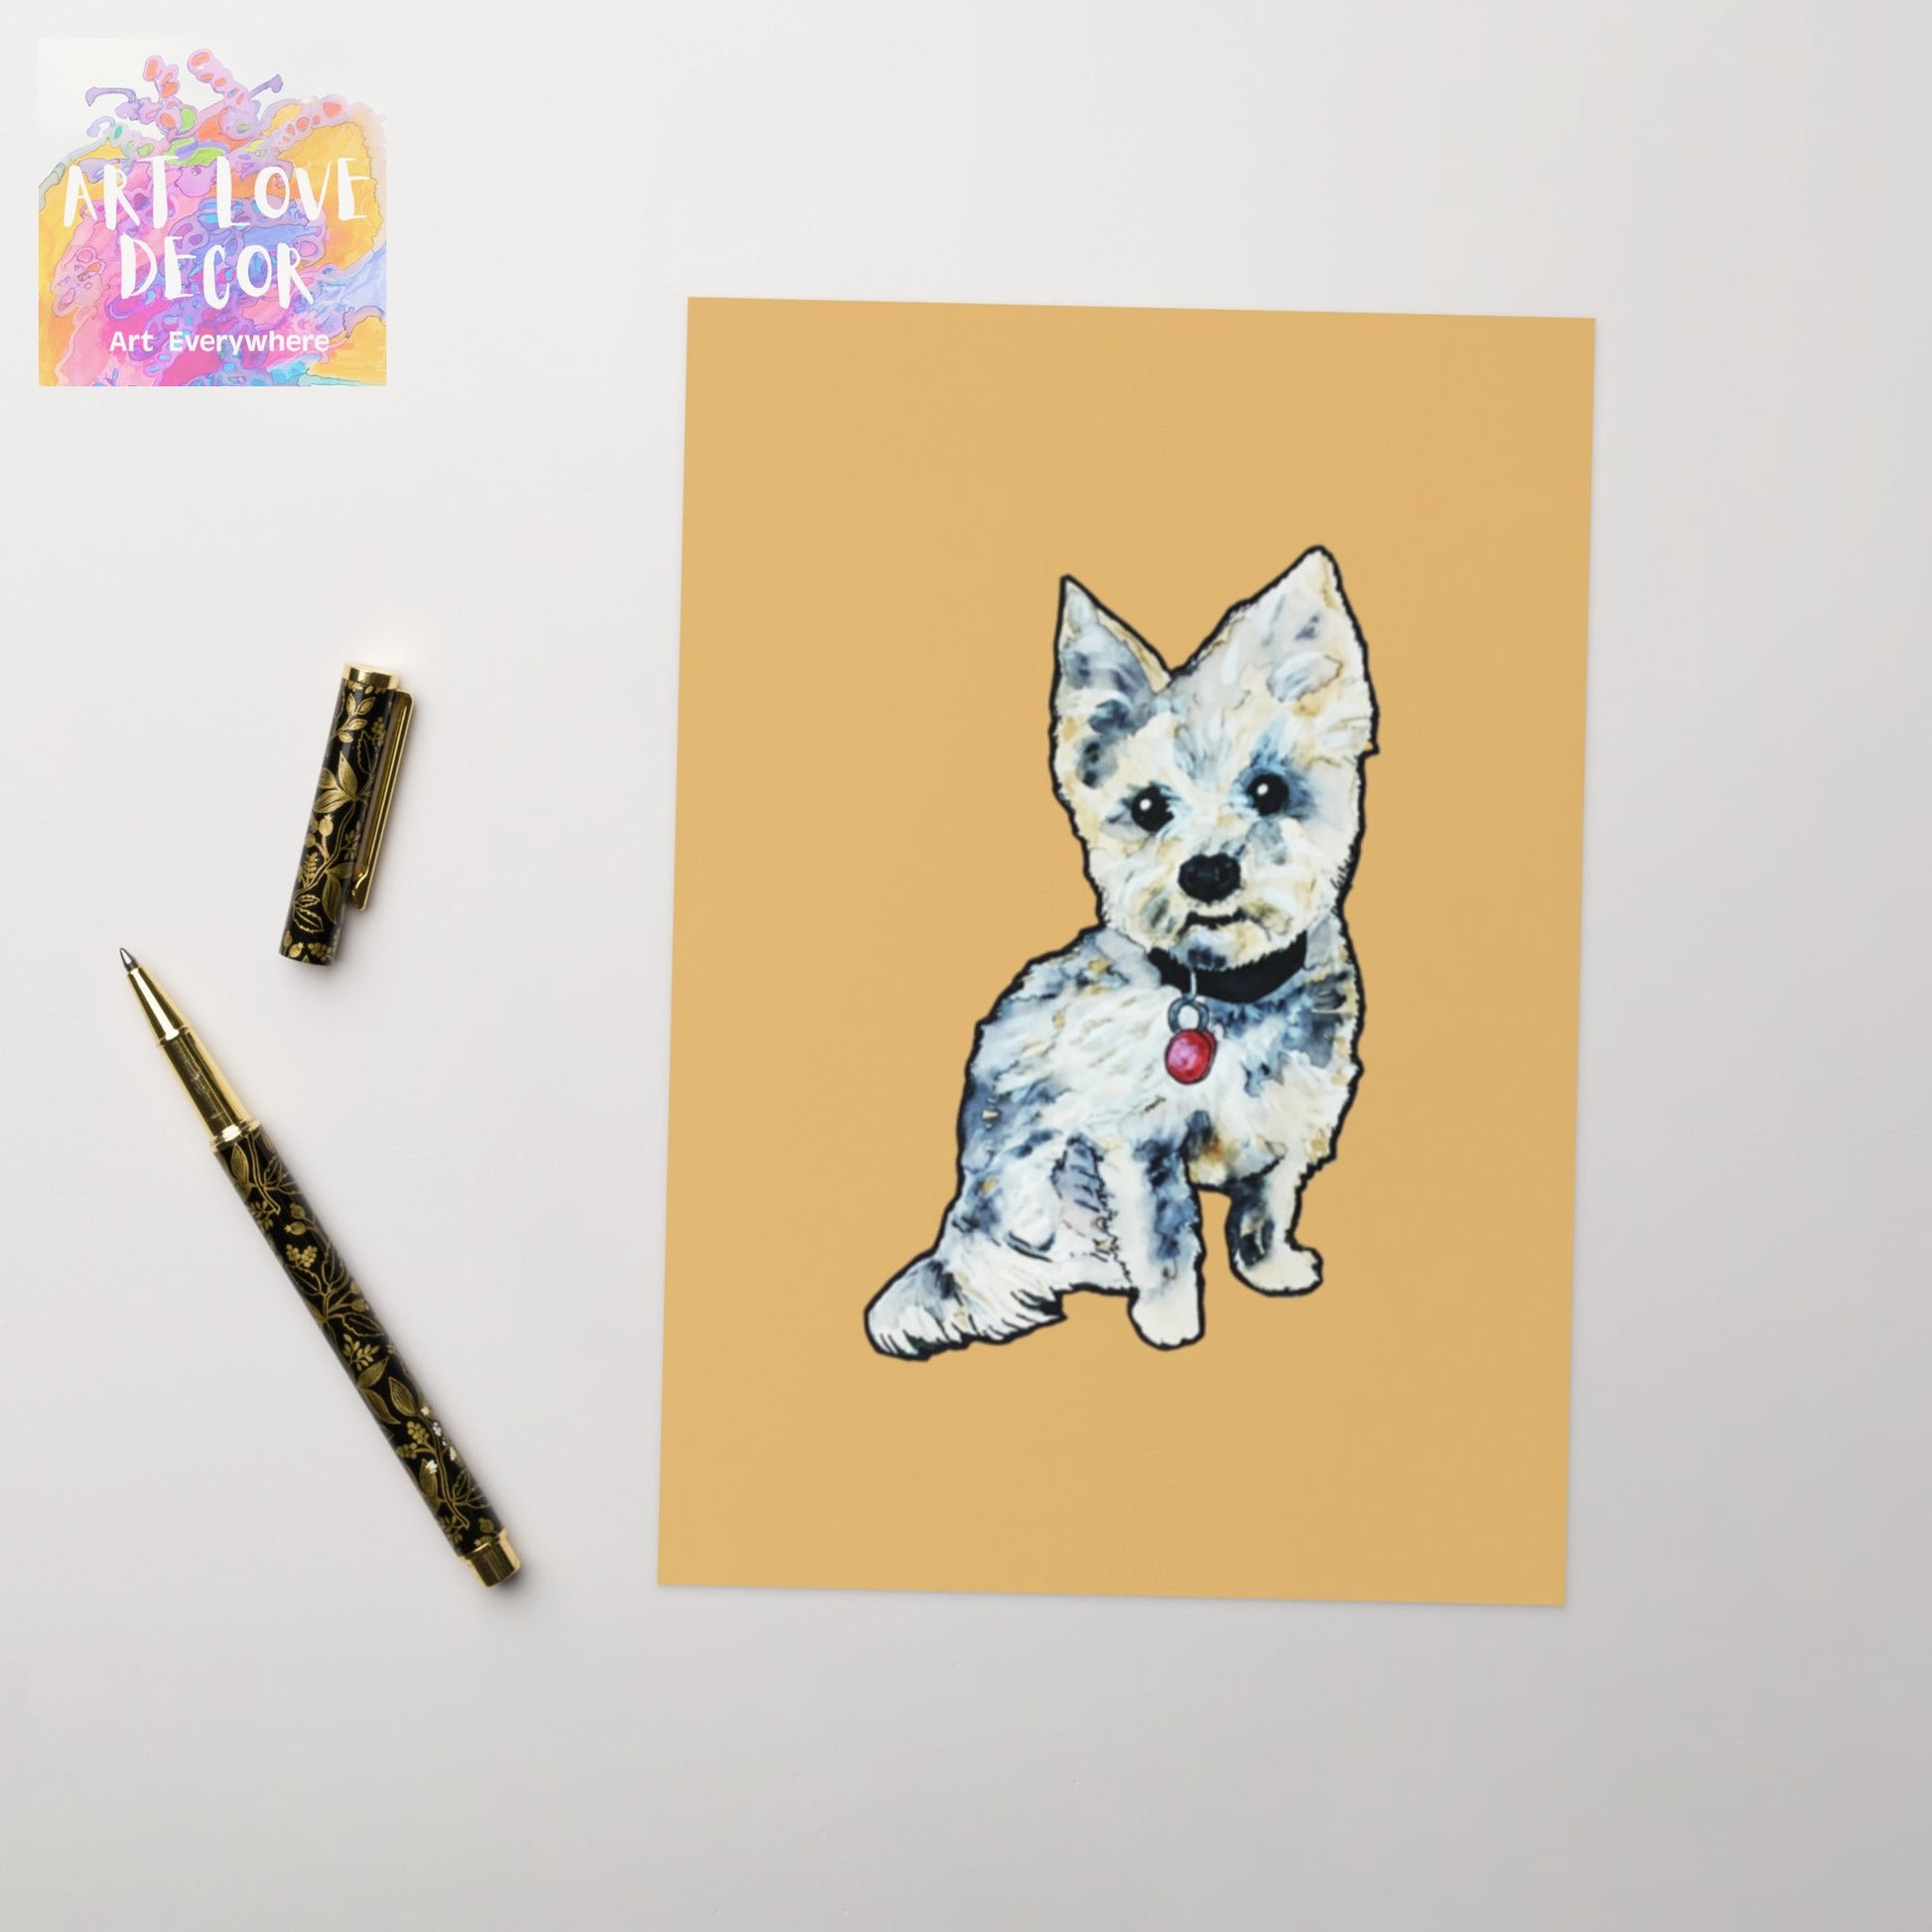 Yorkie Dog Greeting card - Art Love Decor